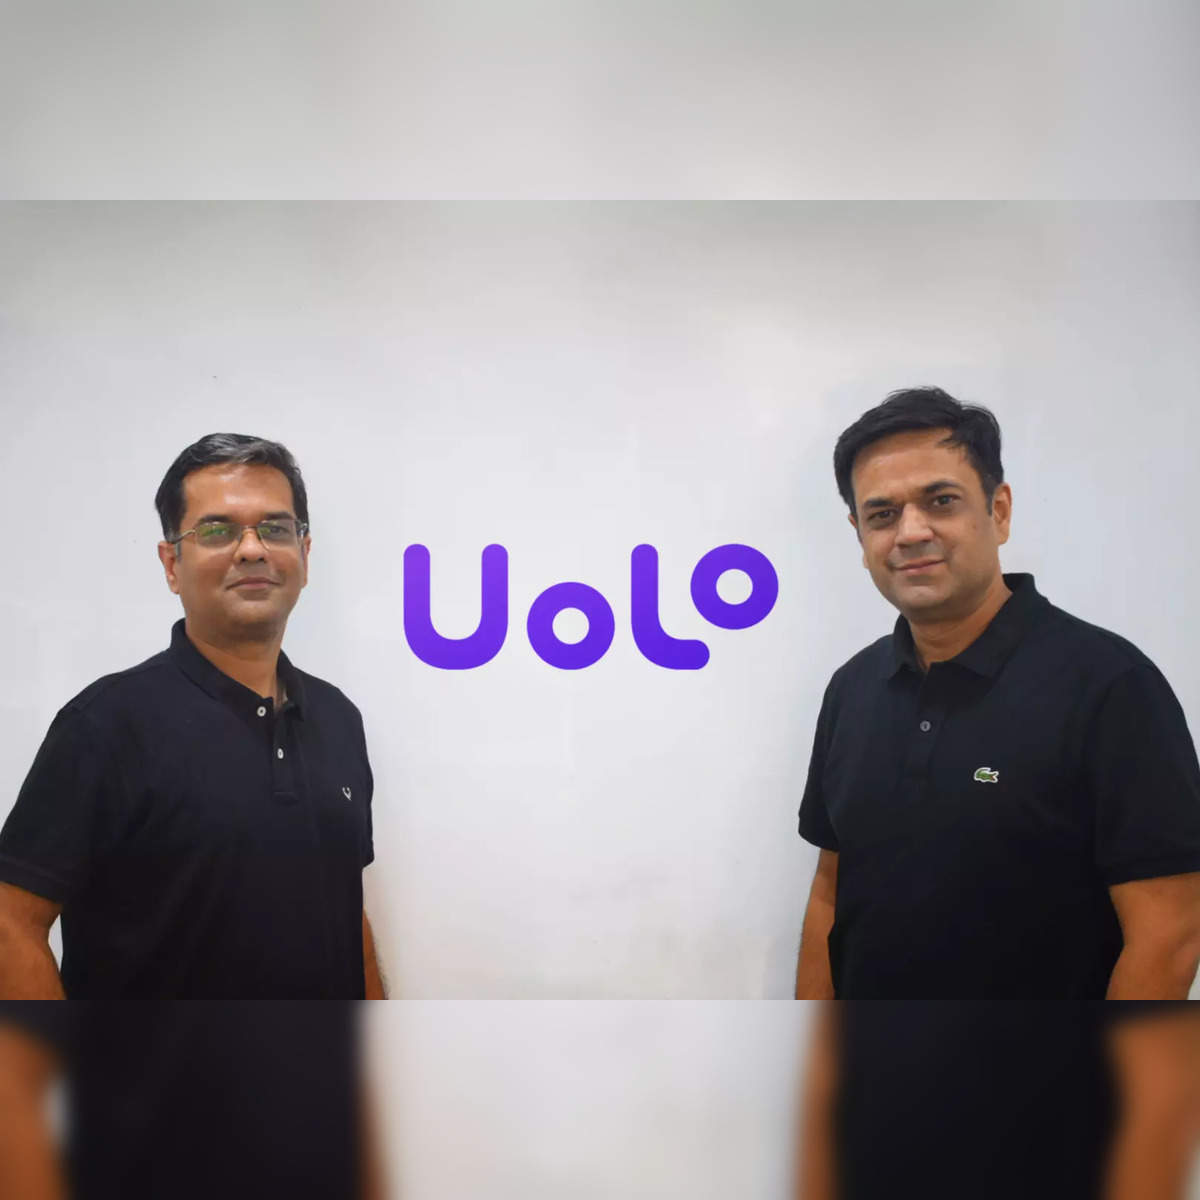 Uolo funding: B2B edtech startup Uolo raises $22.5 million in